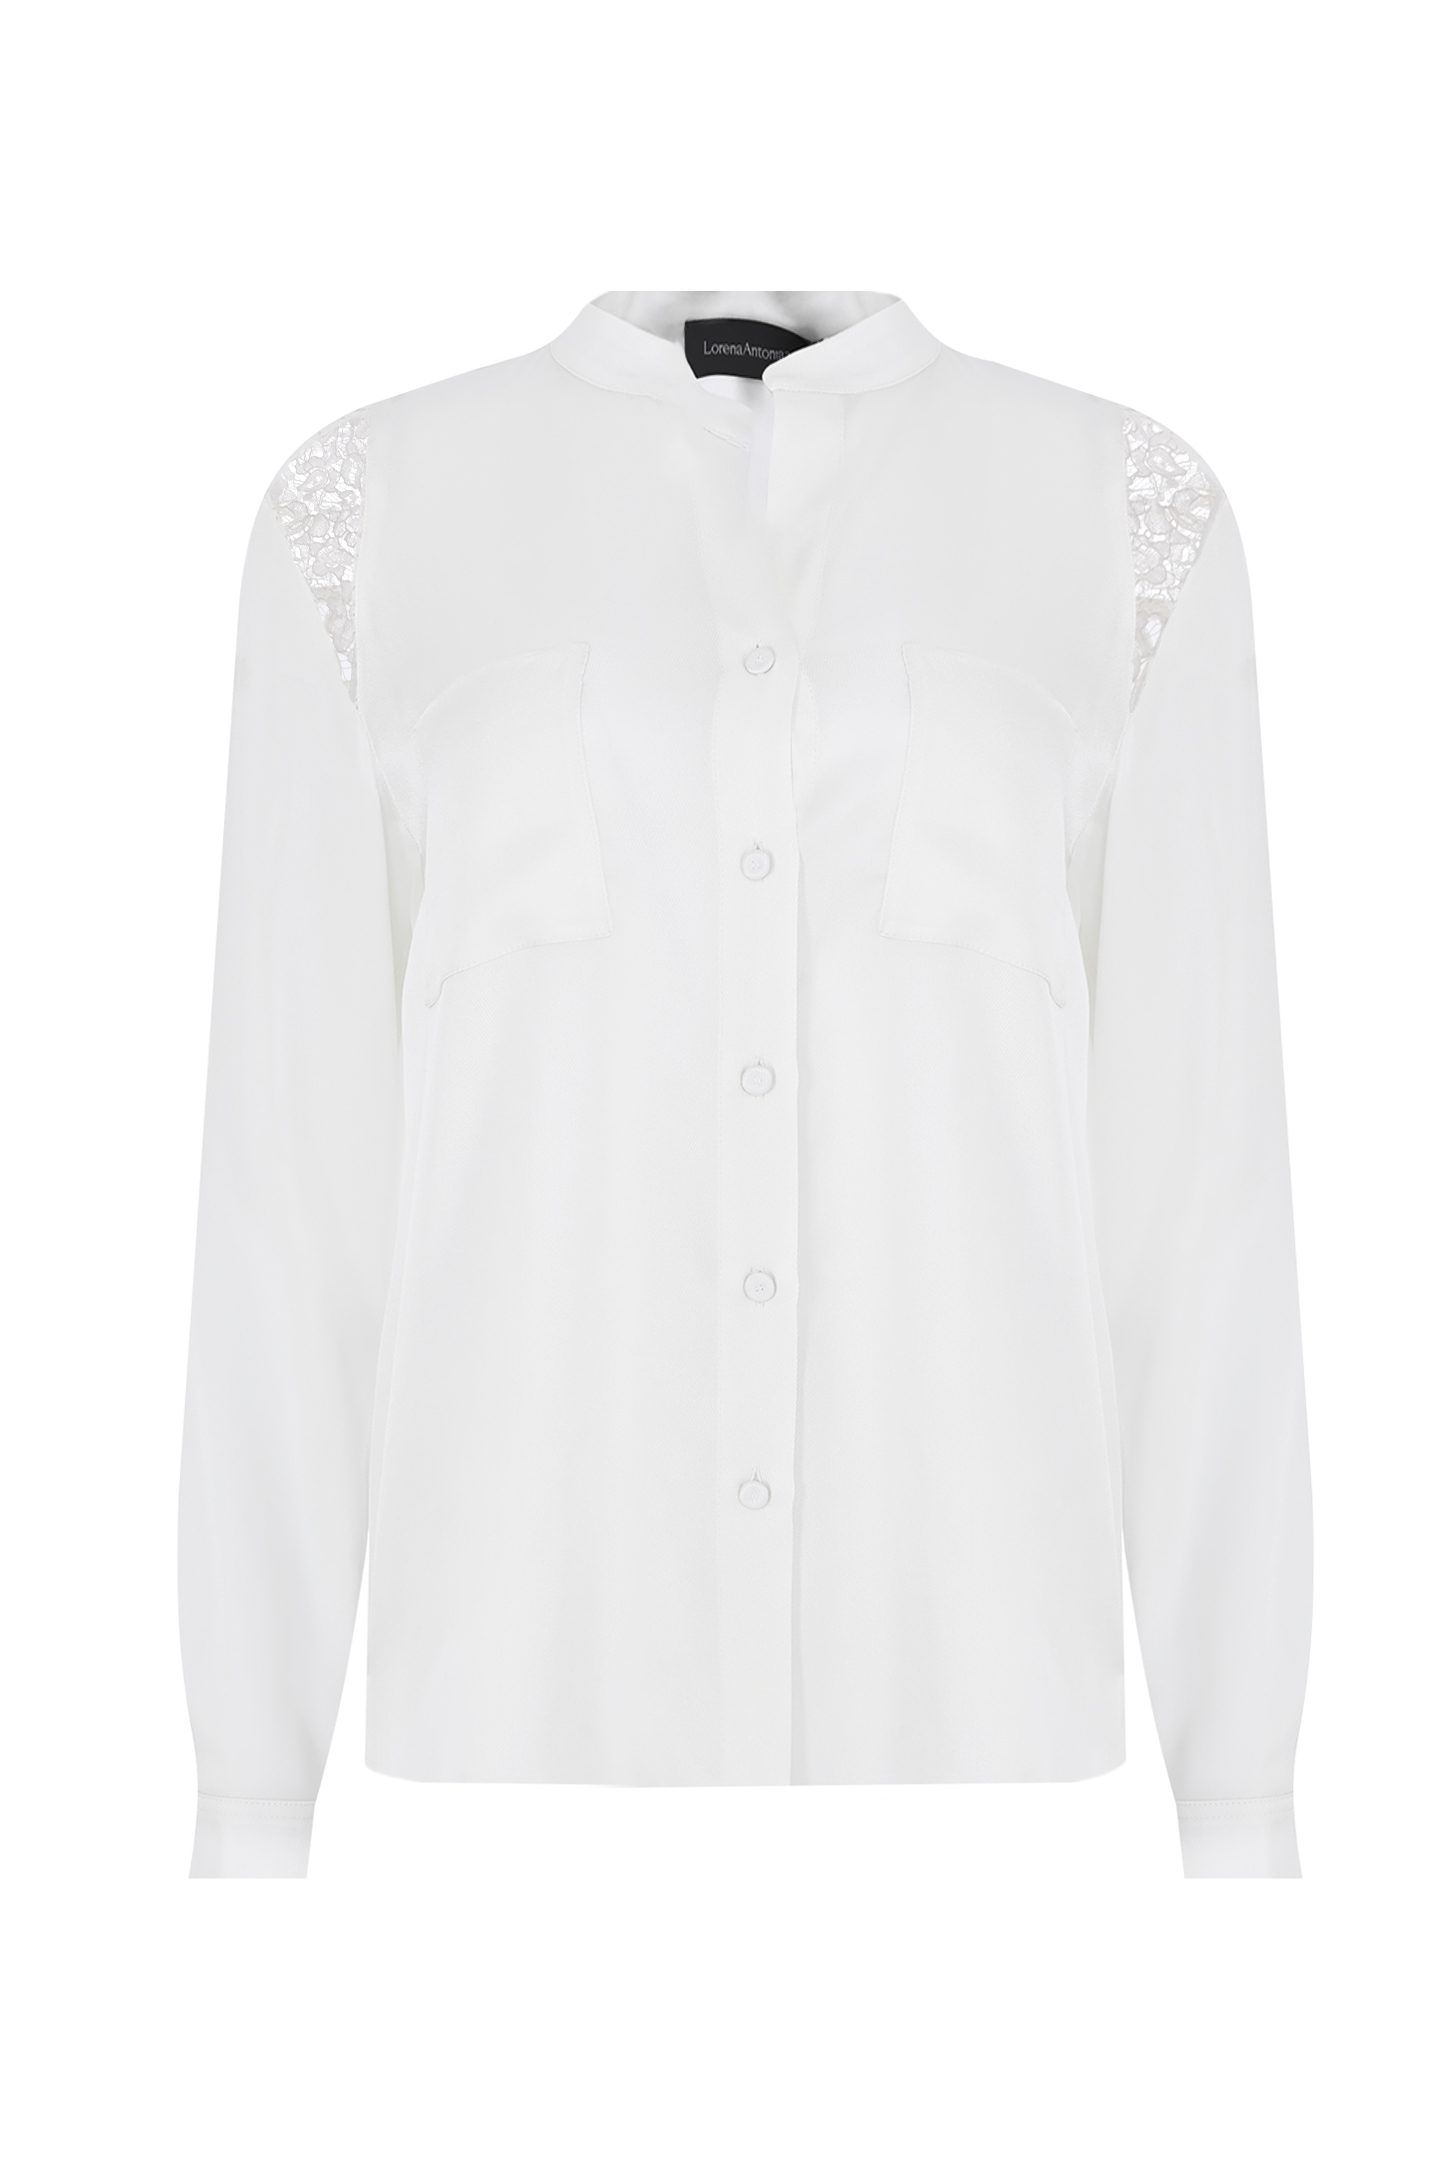 Блуза LORENA ANTONIAZZI P2463CA09B, цвет: Белый, Женский